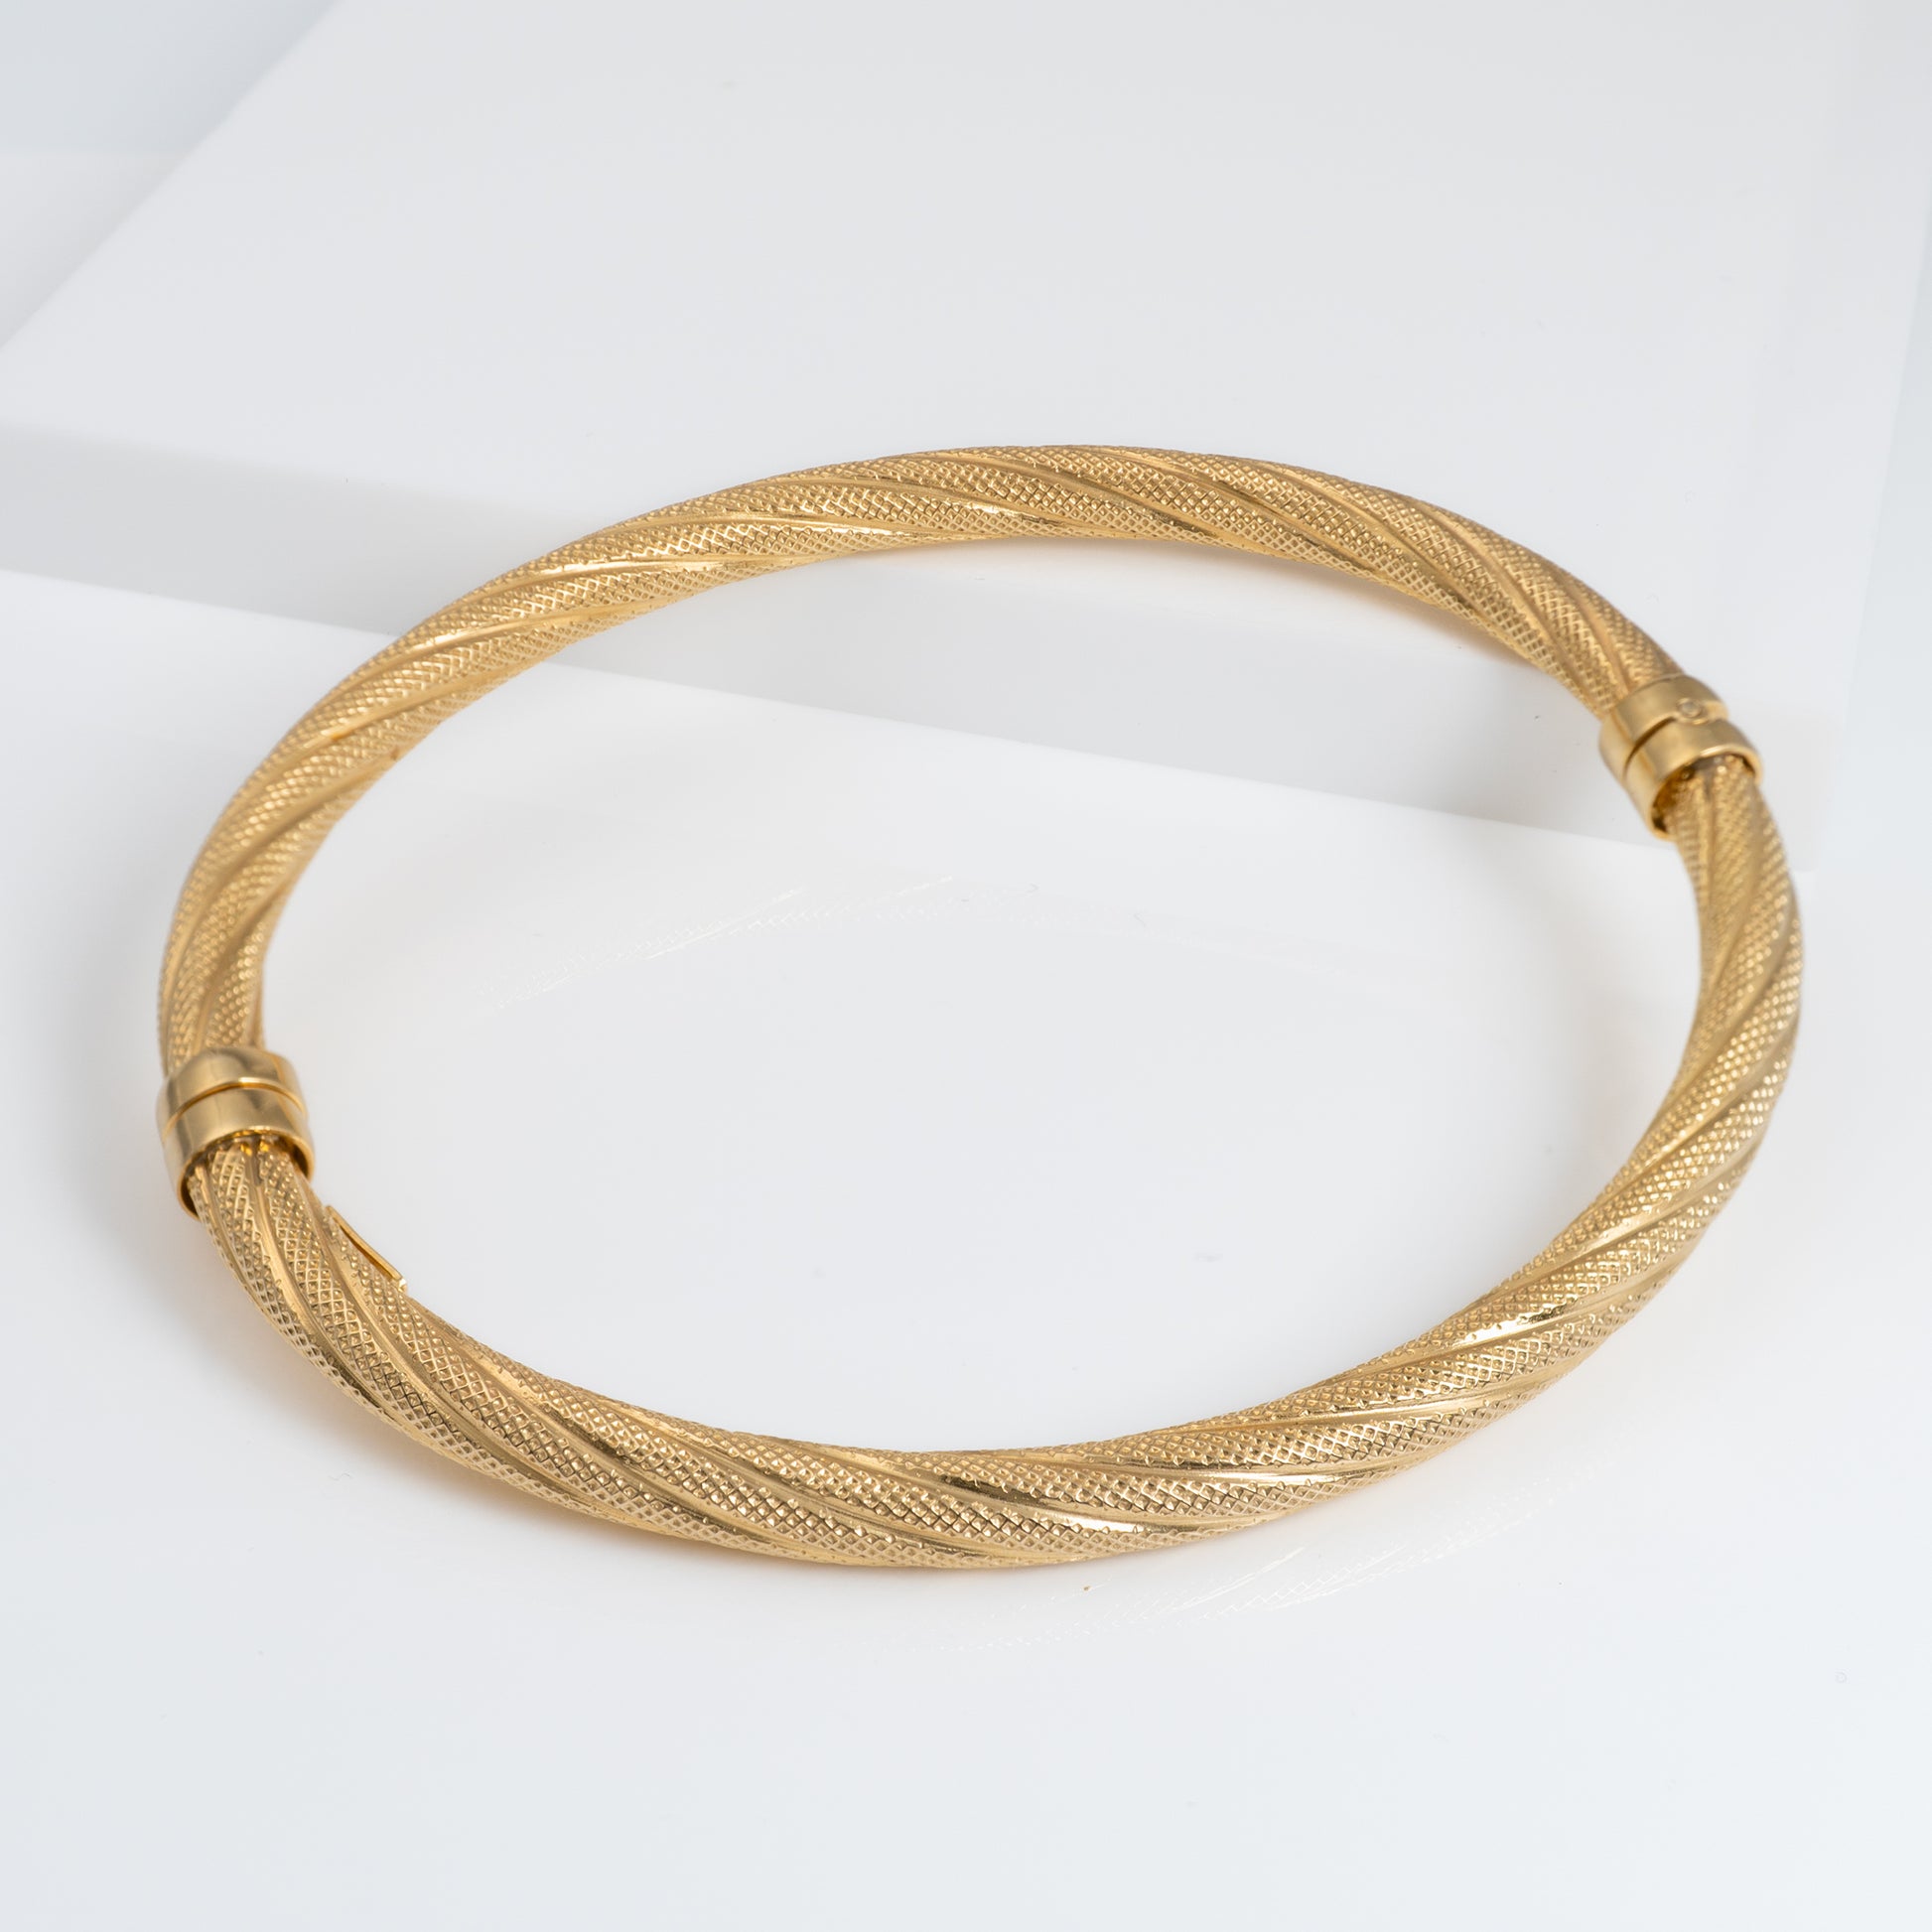 gold bangle bracelet with spring lock